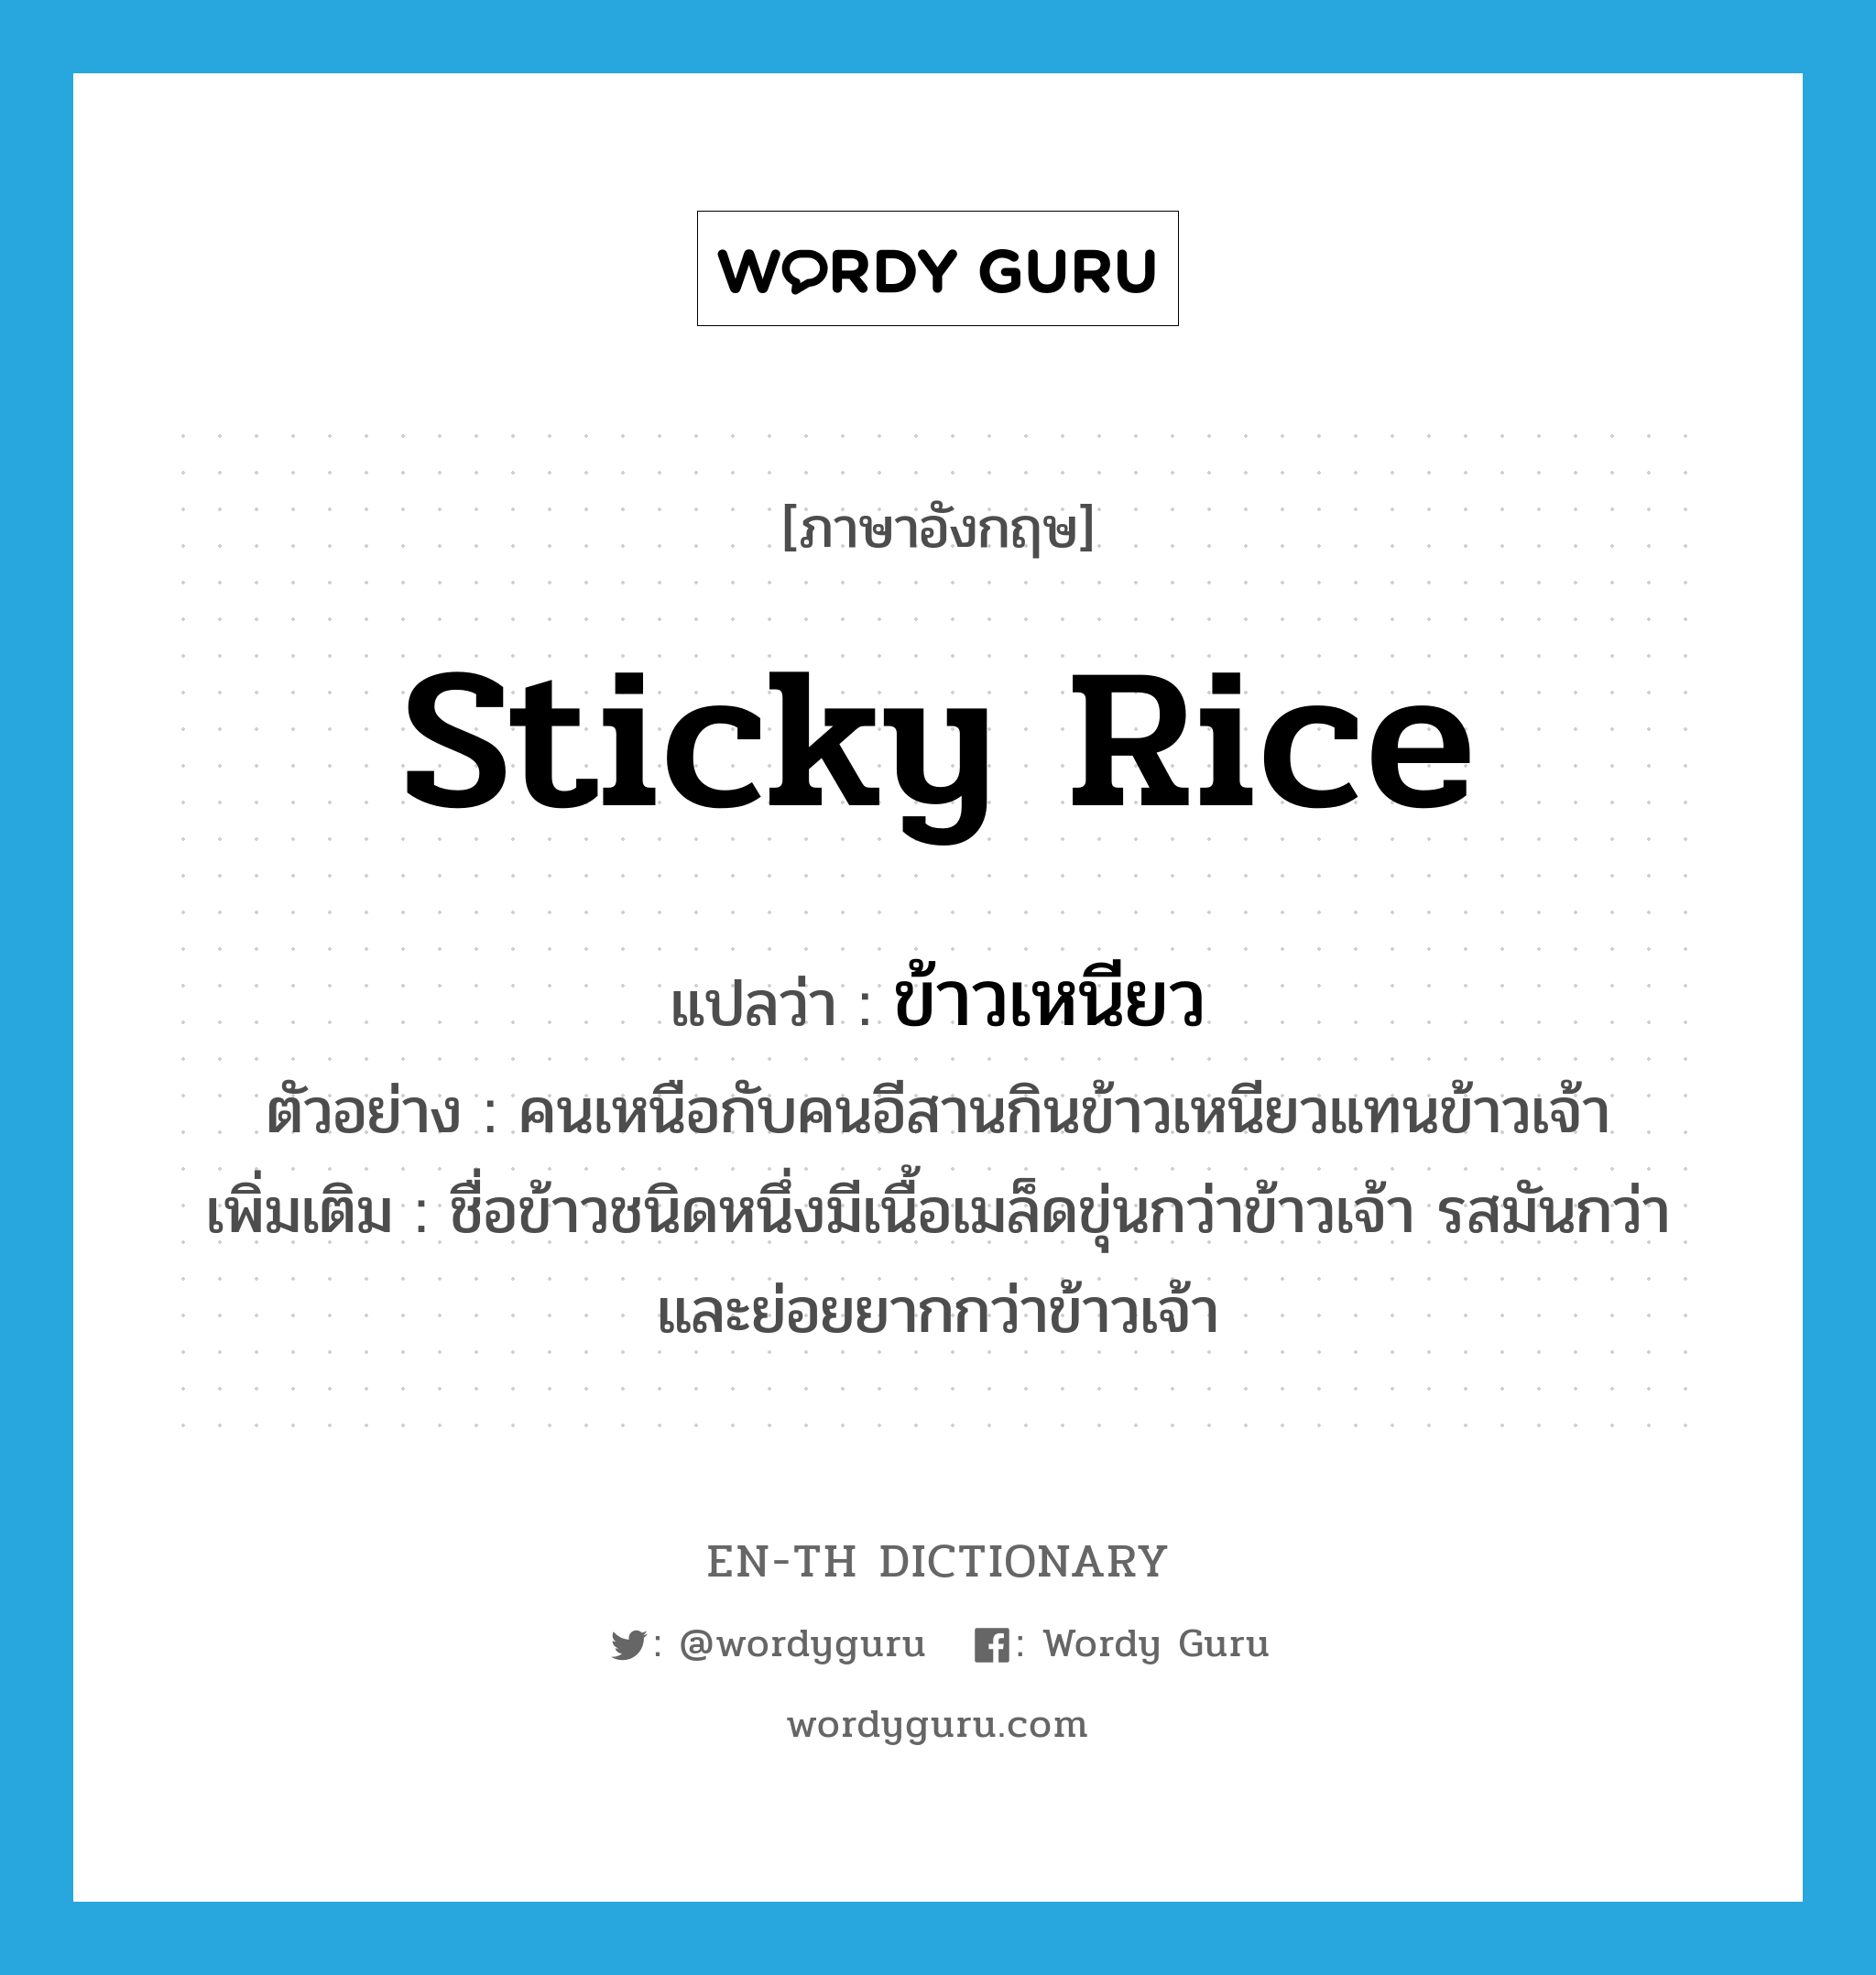 sticky rice แปลว่า?, คำศัพท์ภาษาอังกฤษ sticky rice แปลว่า ข้าวเหนียว ประเภท N ตัวอย่าง คนเหนือกับคนอีสานกินข้าวเหนียวแทนข้าวเจ้า เพิ่มเติม ชื่อข้าวชนิดหนึ่งมีเนื้อเมล็ดขุ่นกว่าข้าวเจ้า รสมันกว่าและย่อยยากกว่าข้าวเจ้า หมวด N